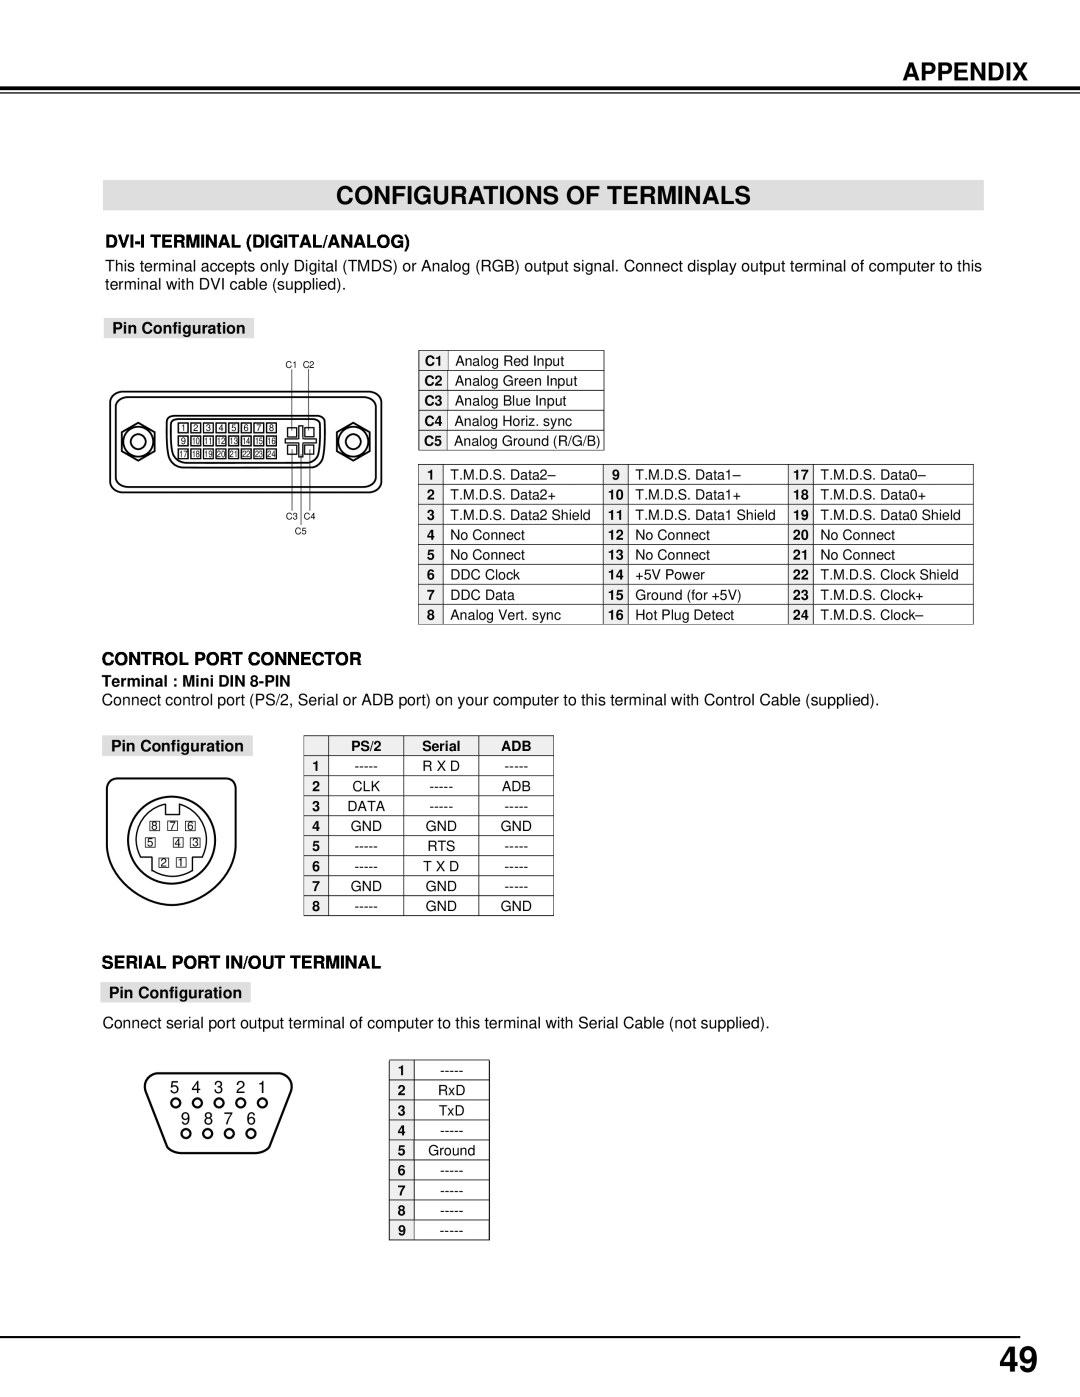 Christie Digital Systems 38-VIV301-01 user manual Appendix Configurations Of Terminals, Dvi-I Terminal Digital/Analog 